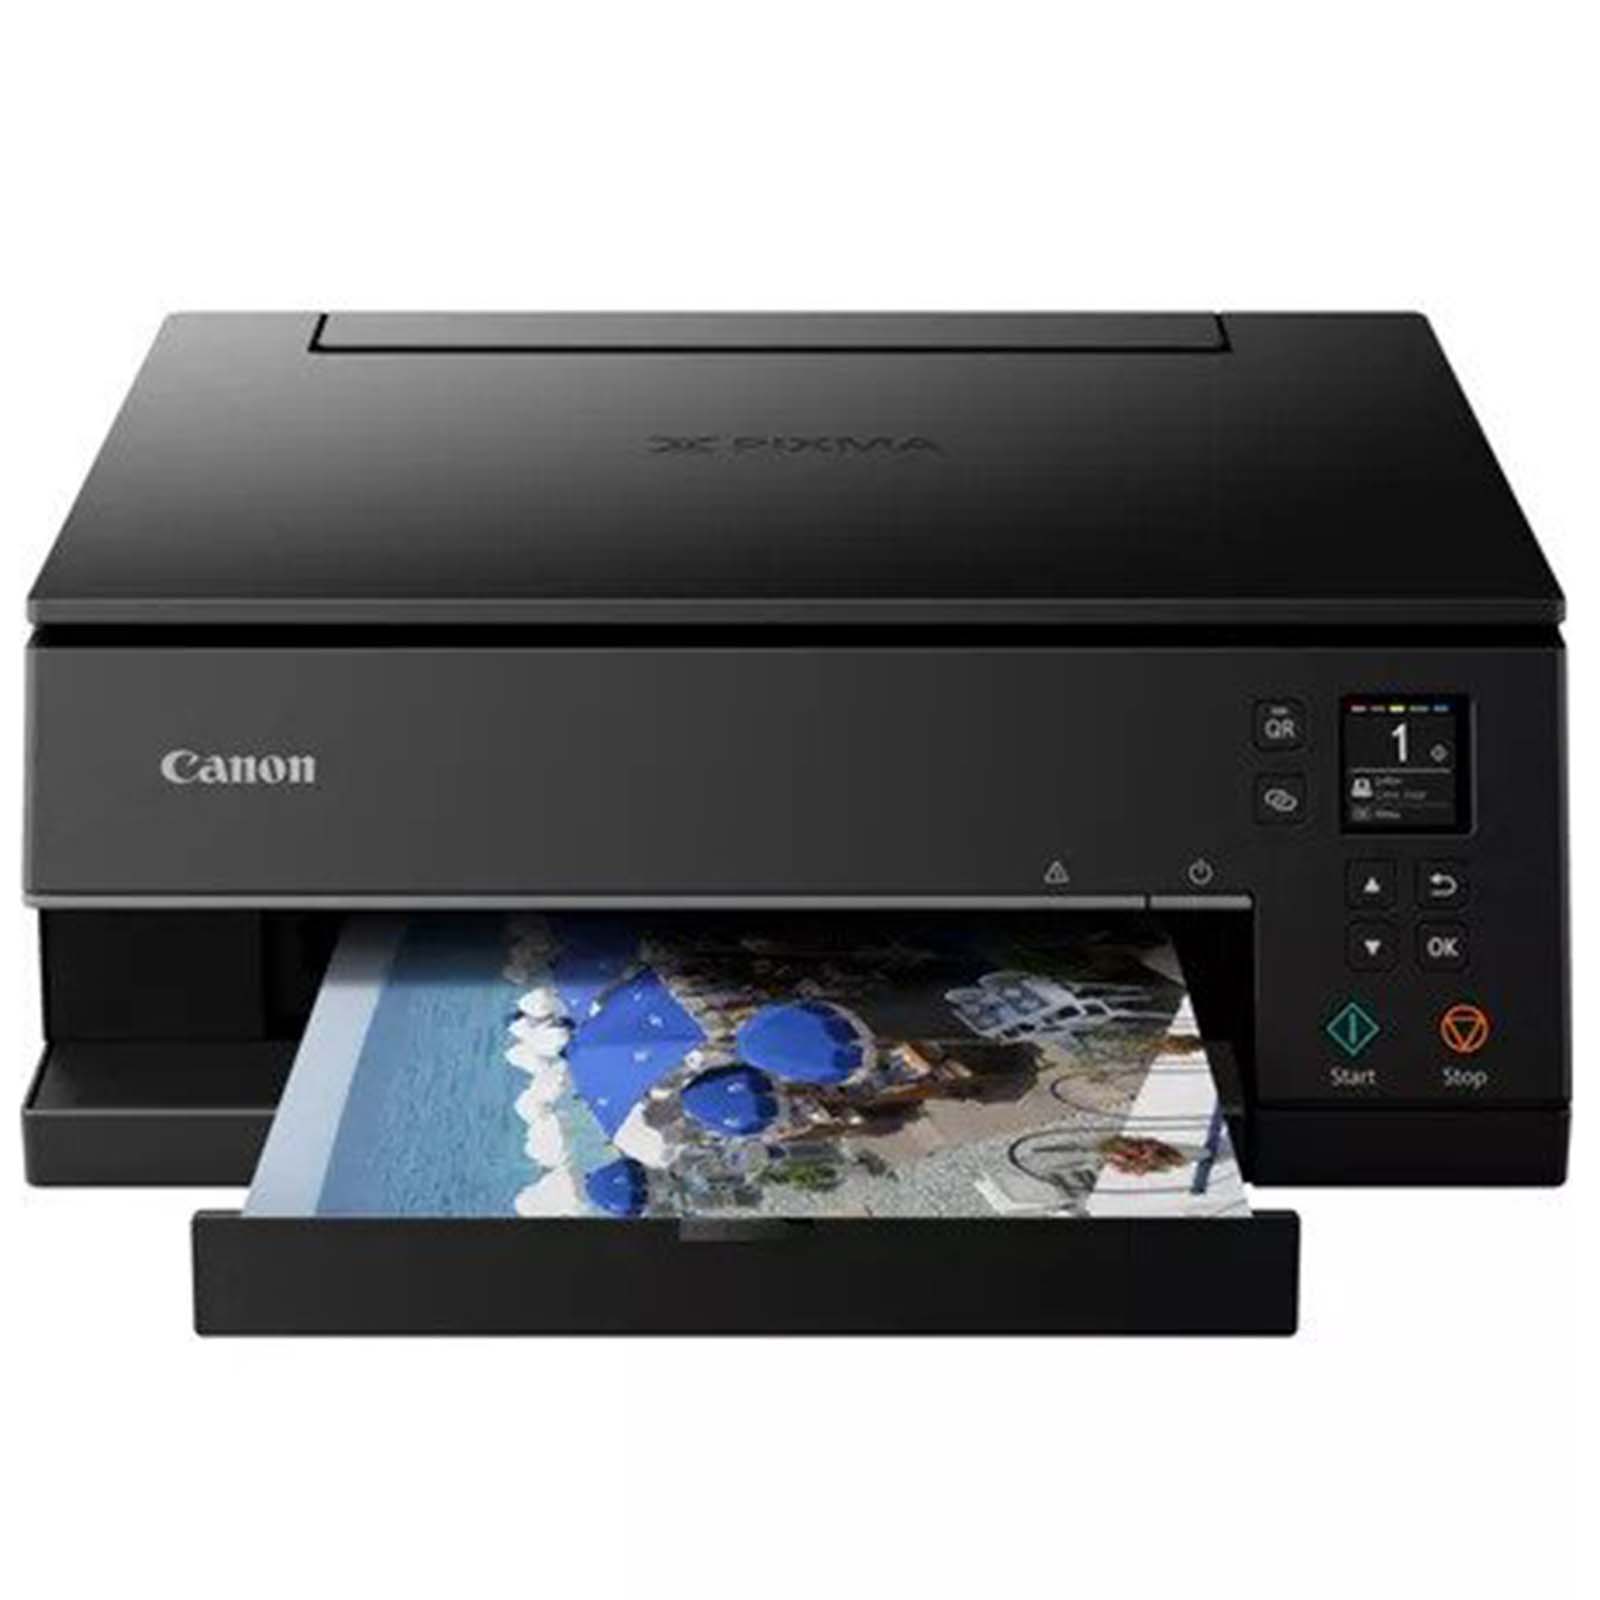 Image of Canon PIXMA TS6350a Printer - Black